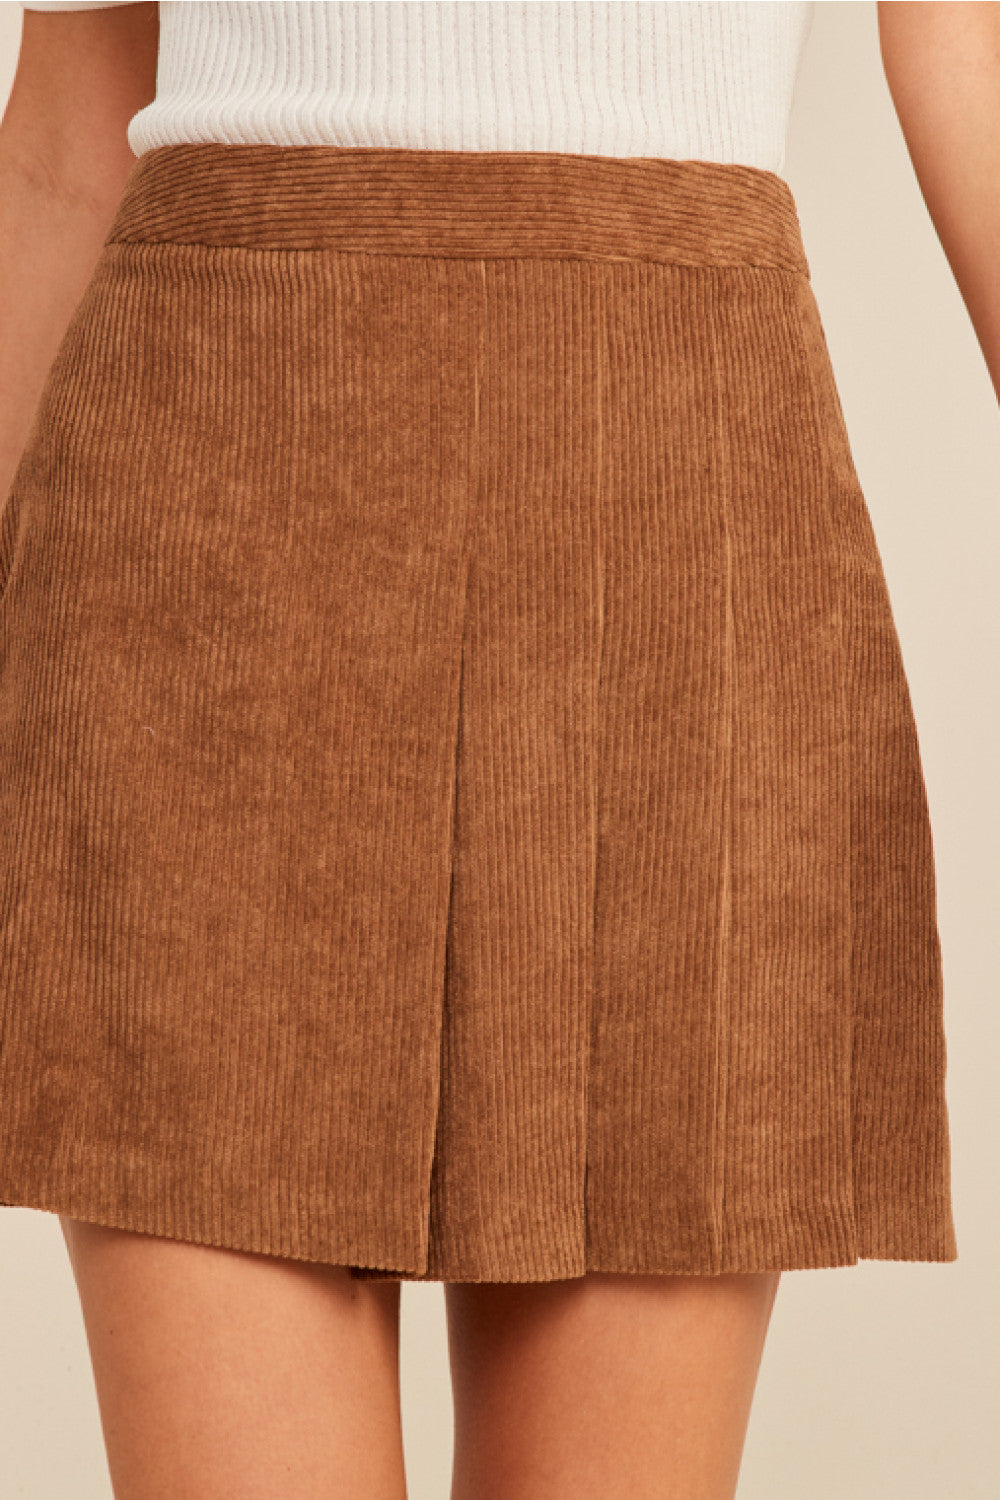 Callie Corduroy Mini Skirt